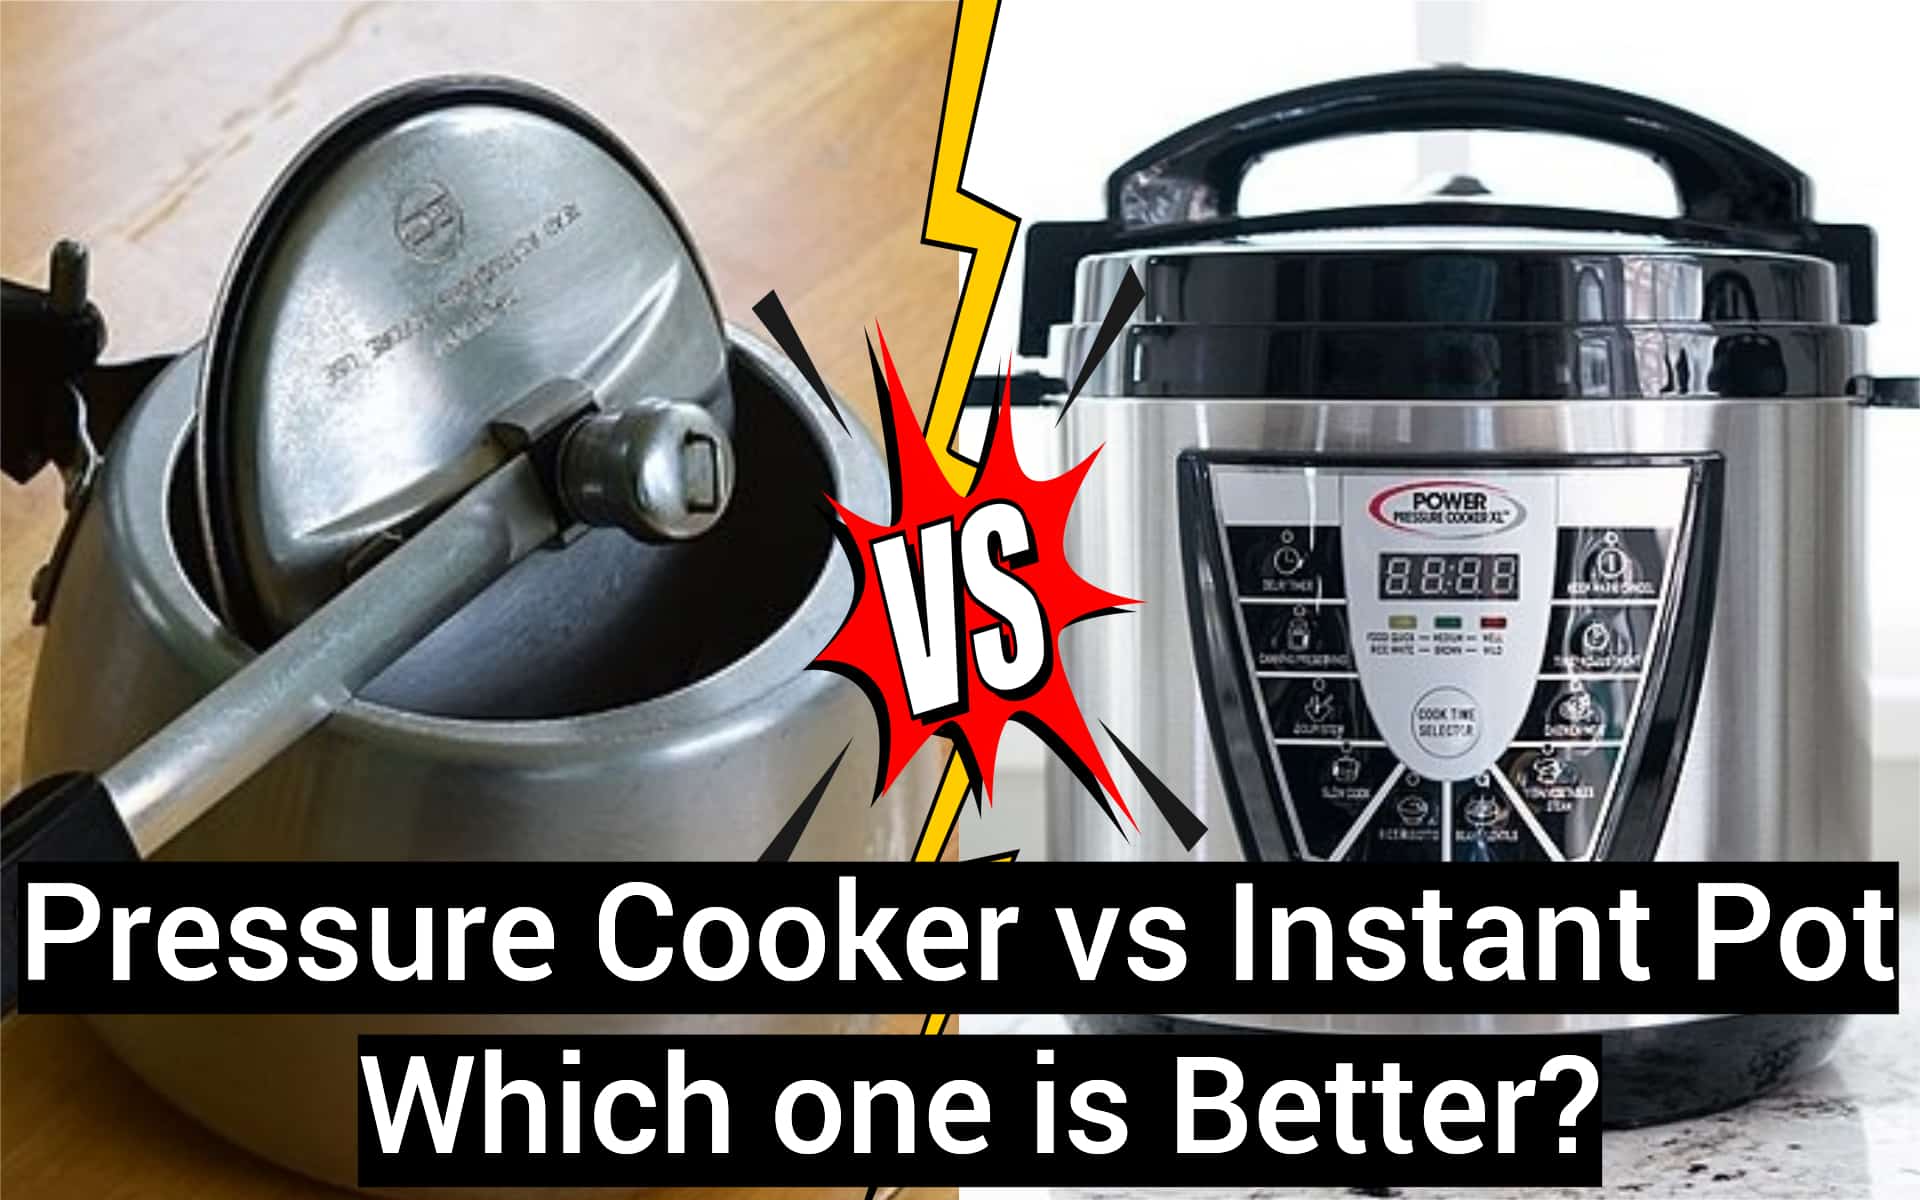 https://hebbarskitchen.com/wp-content/uploads/2021/11/Instant-Pot-vs-Pressure-Cooker-8.jpg